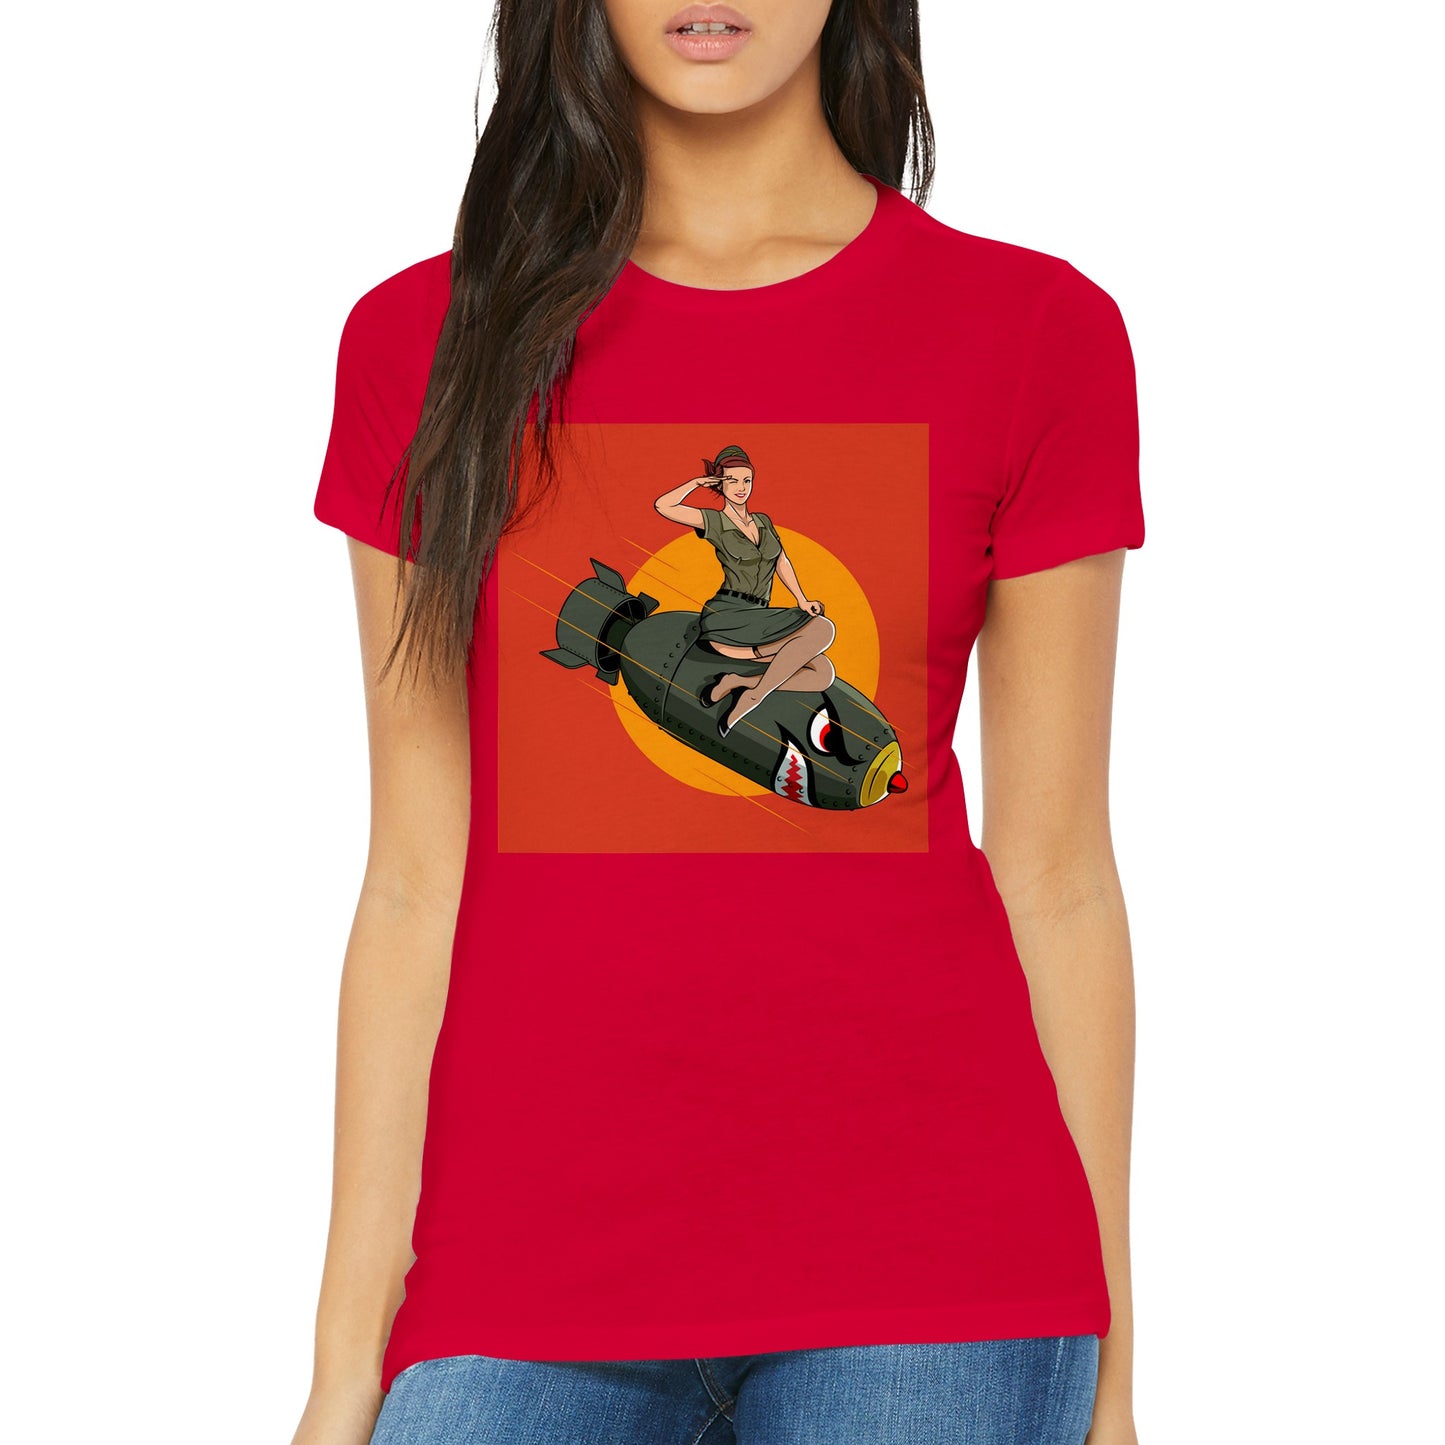 Pin-upgirl on bomb Womens T-shirt